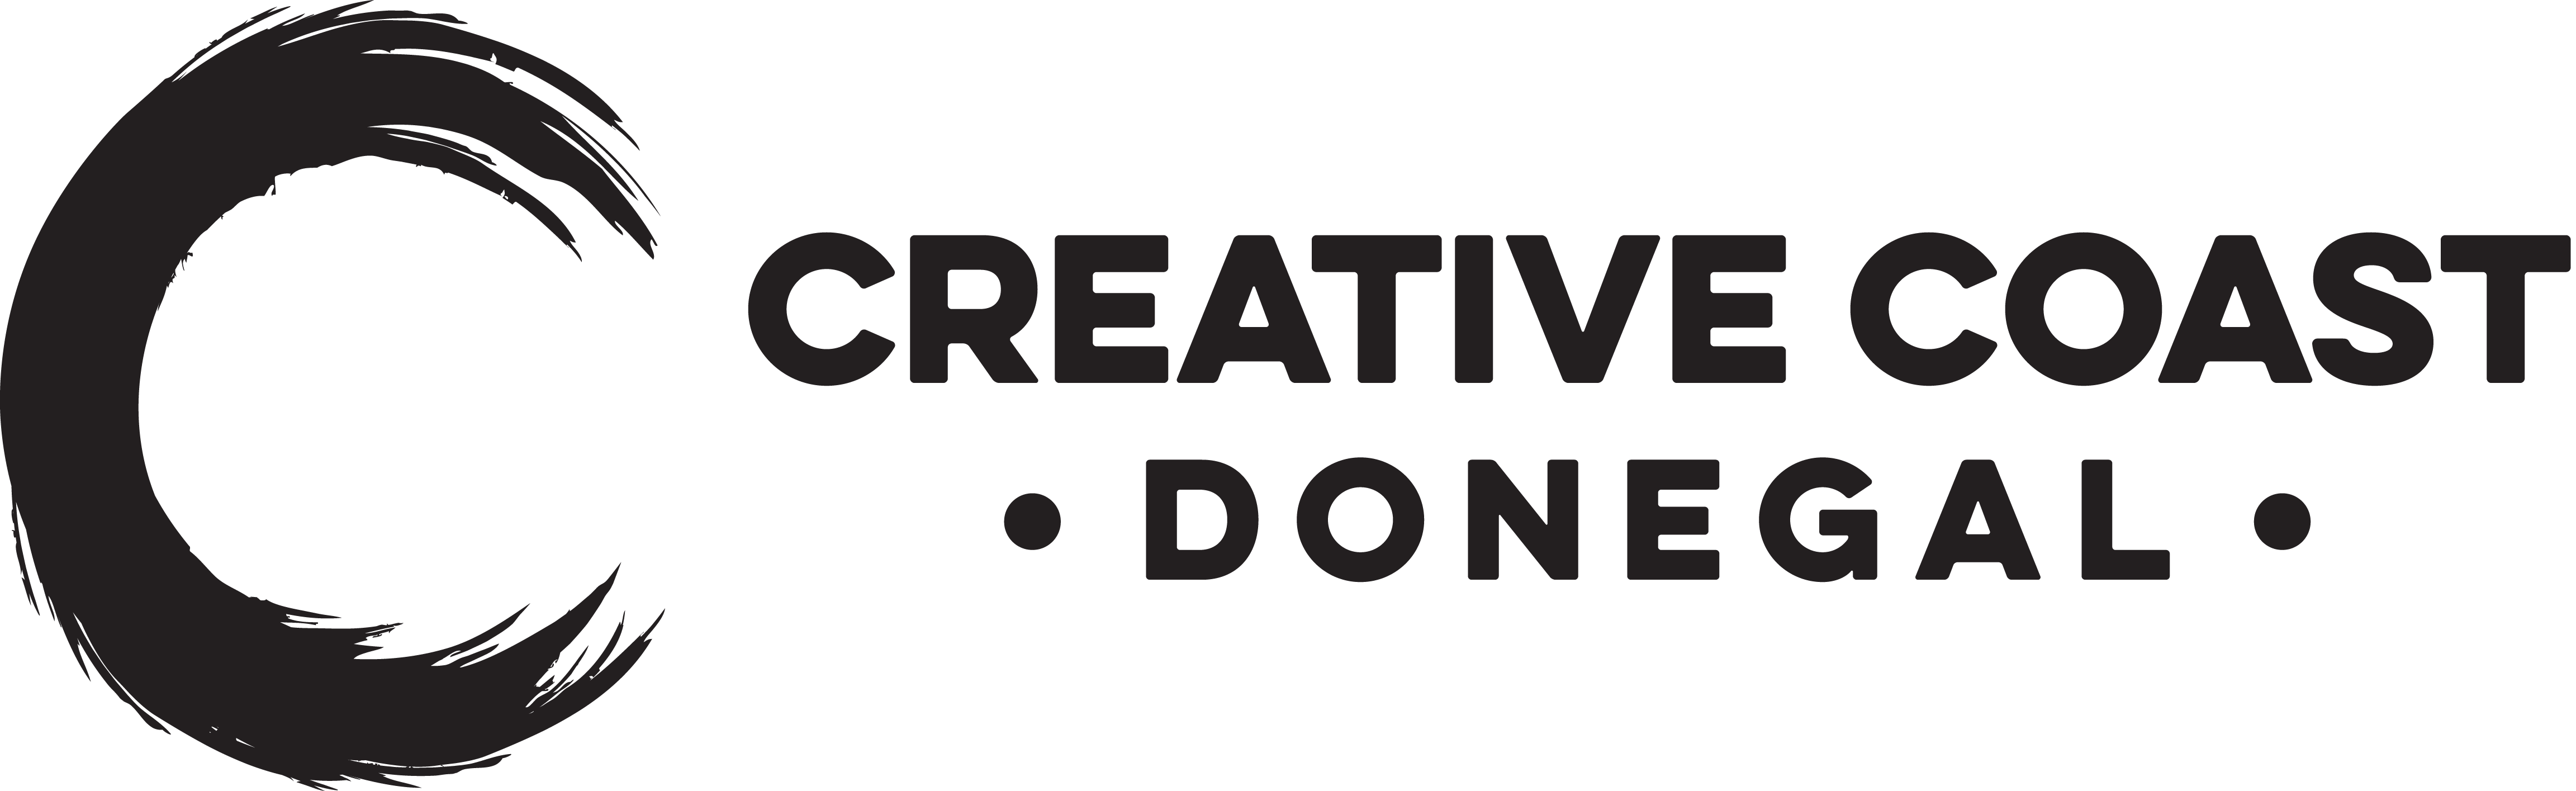 Creative Coast Donegal Logo